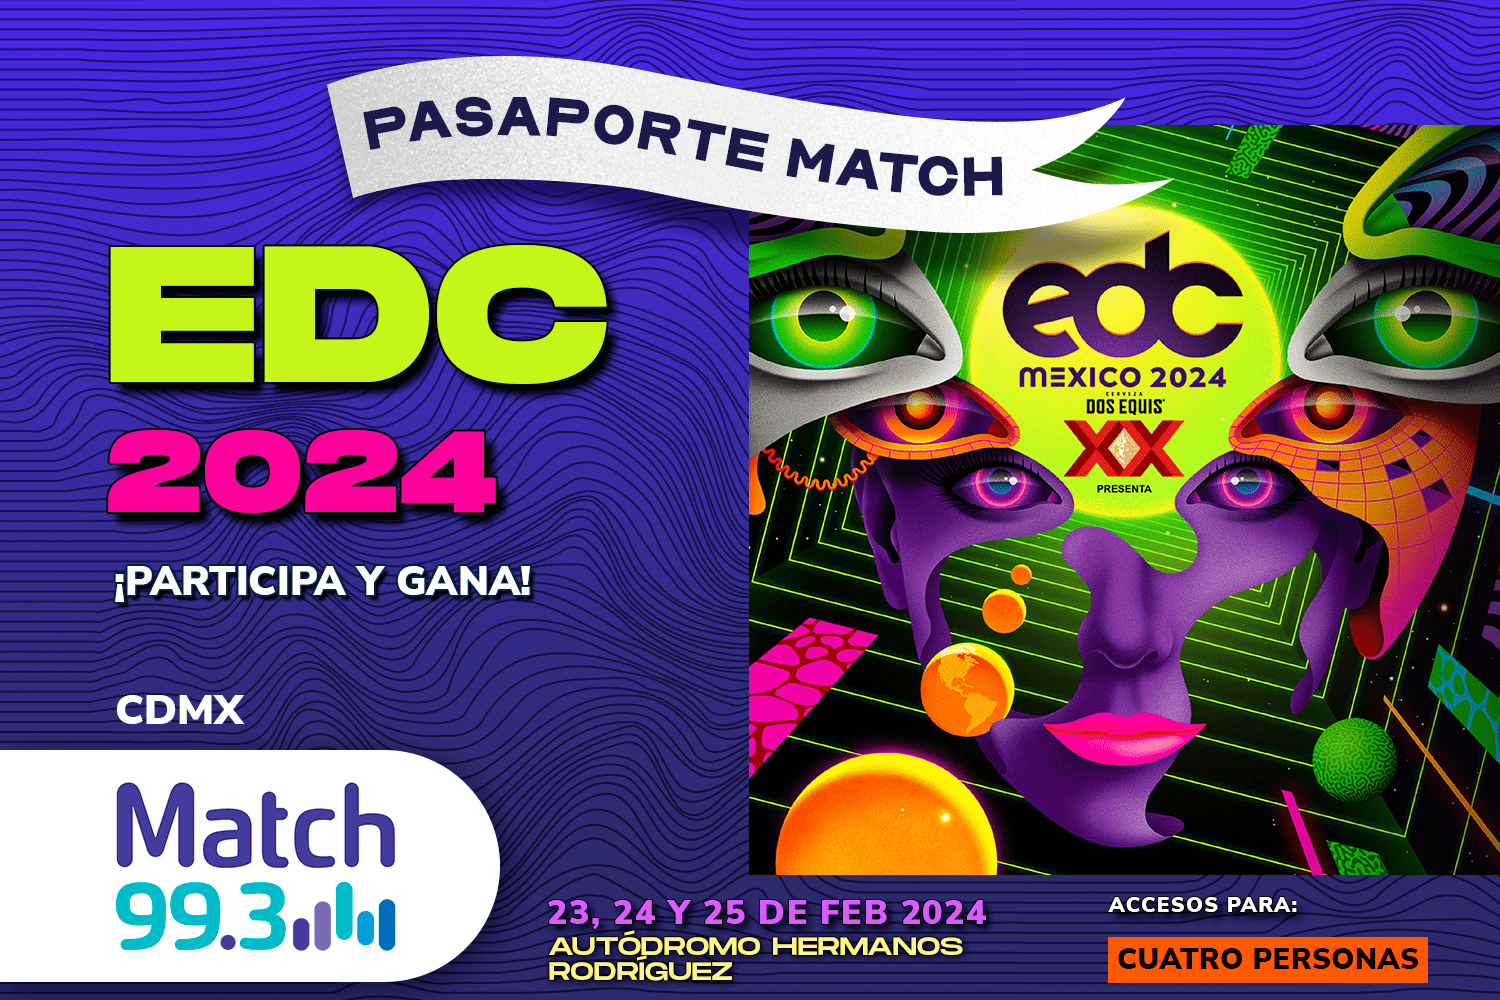 Pasaporte Match CDMX Festival EDC 2024 Match FM